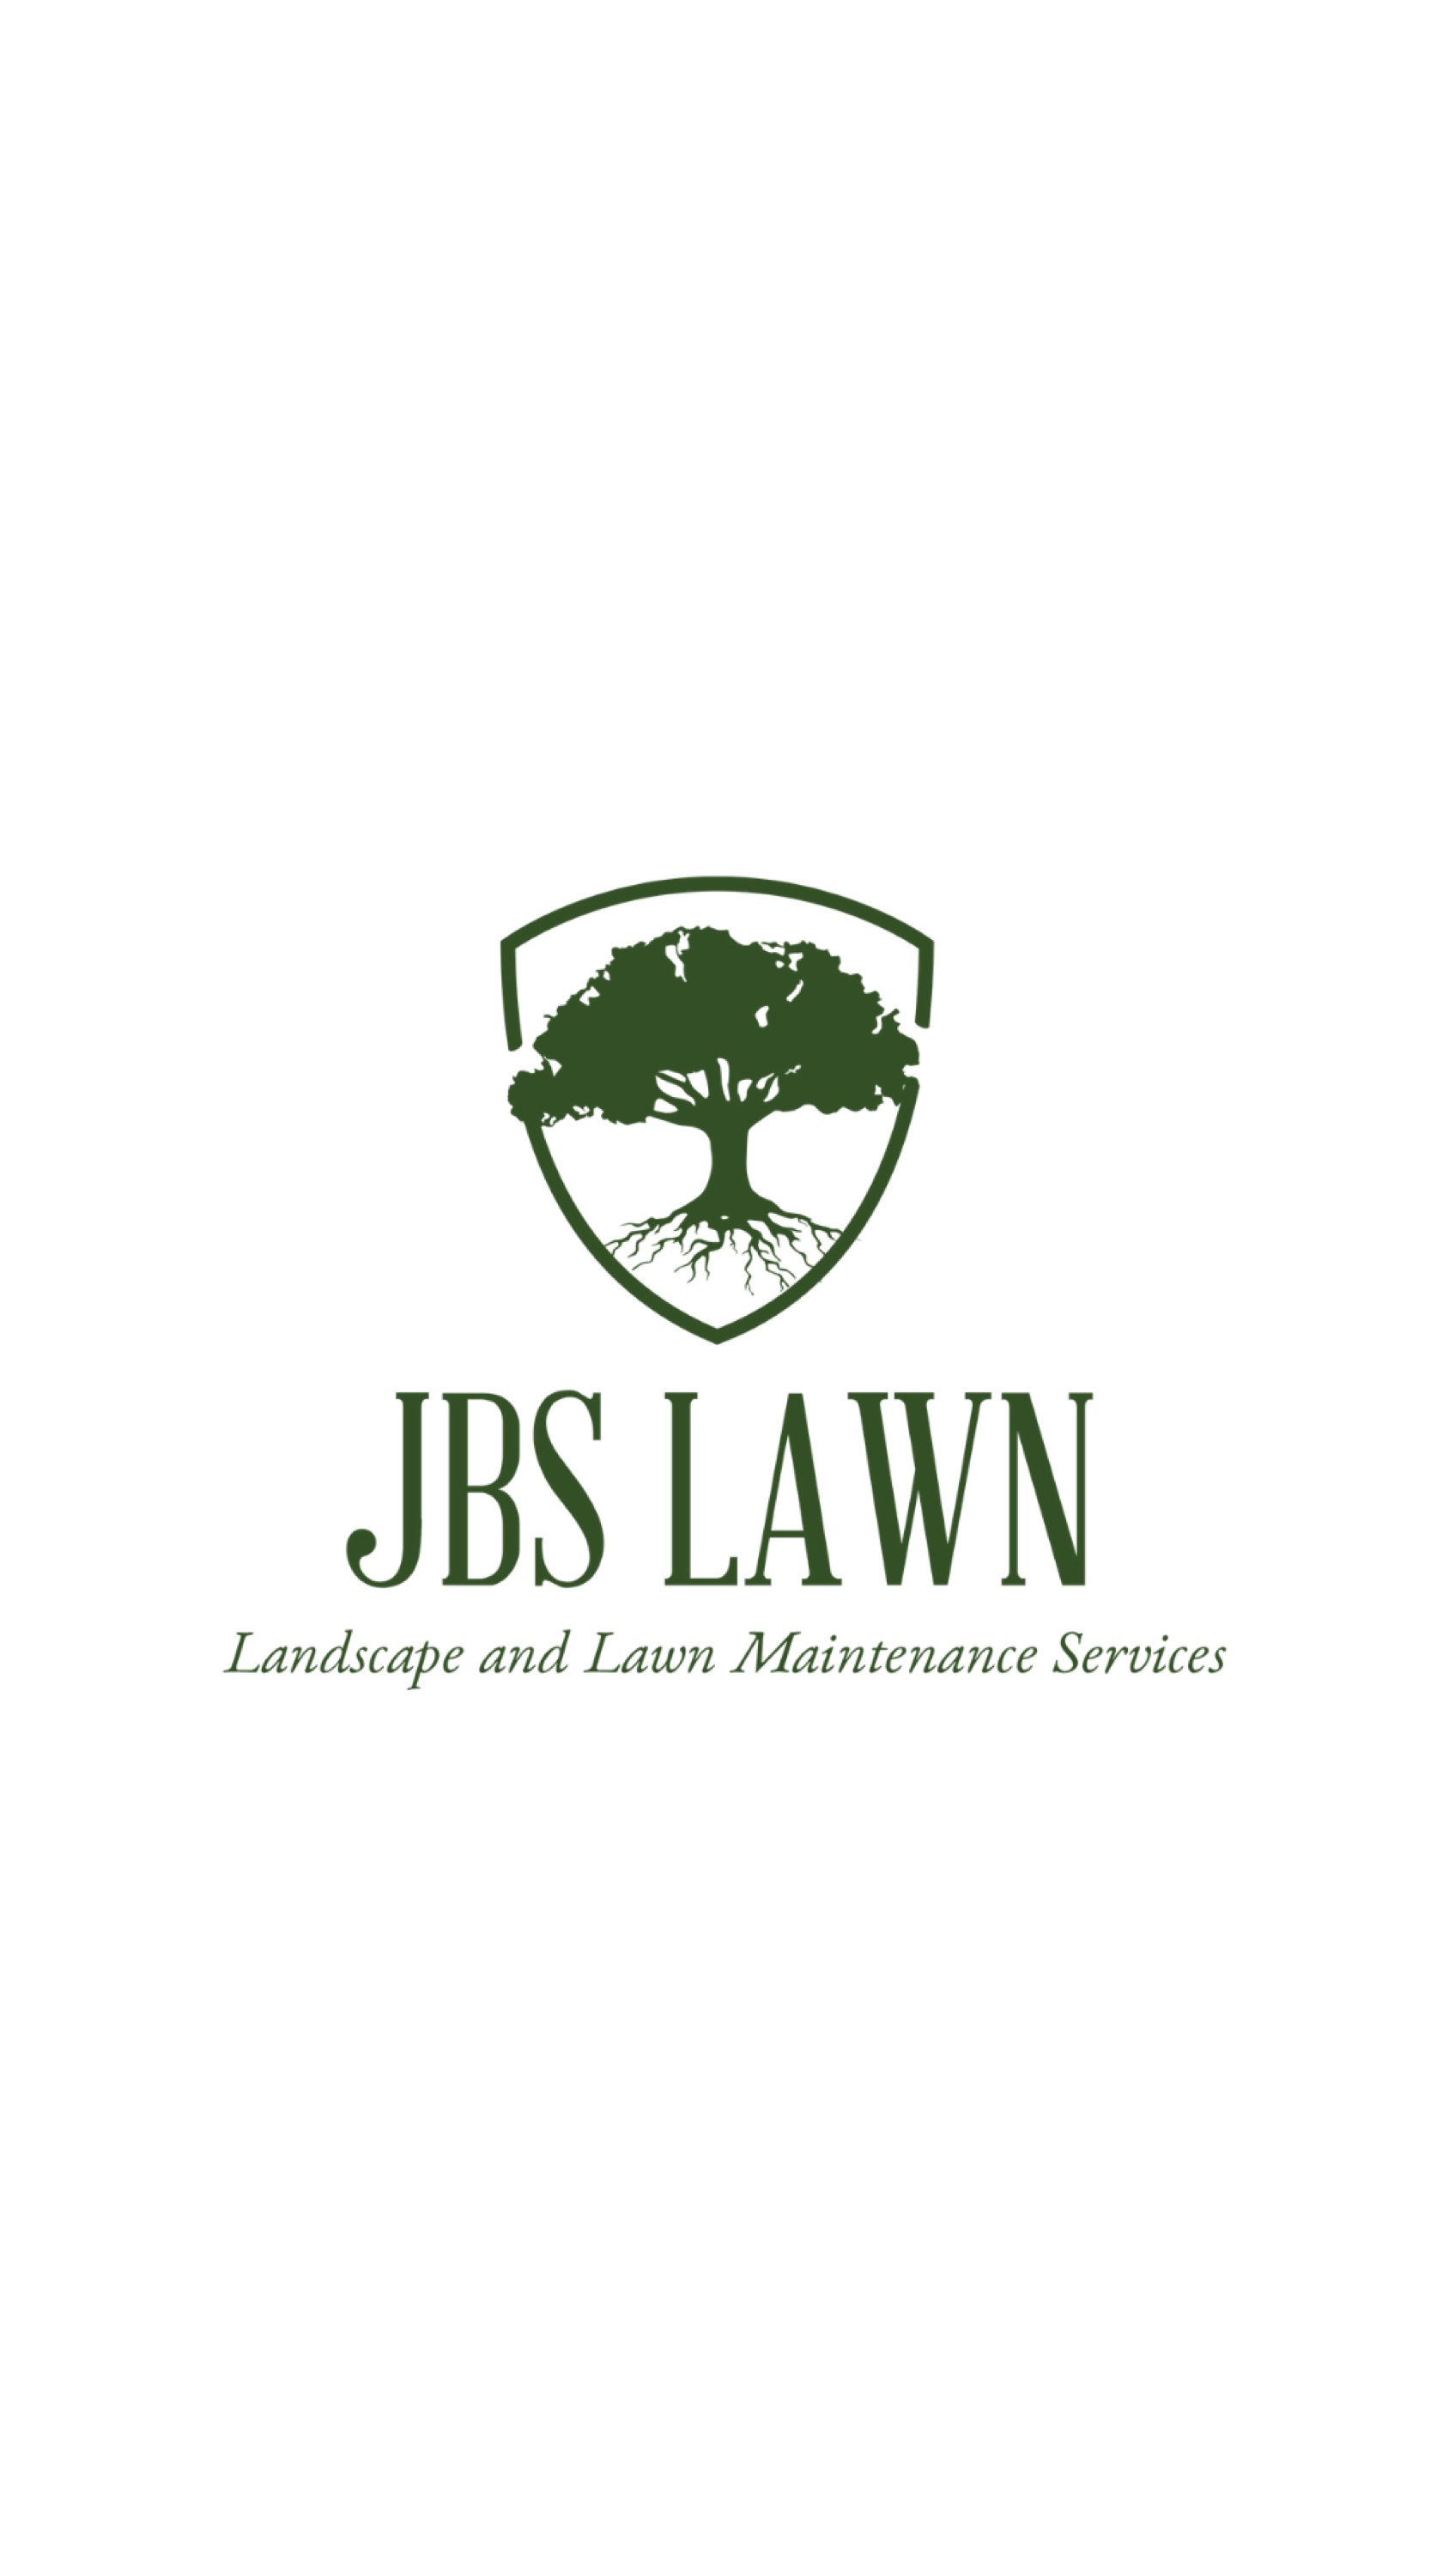 JBS Lawn North Houston Logo